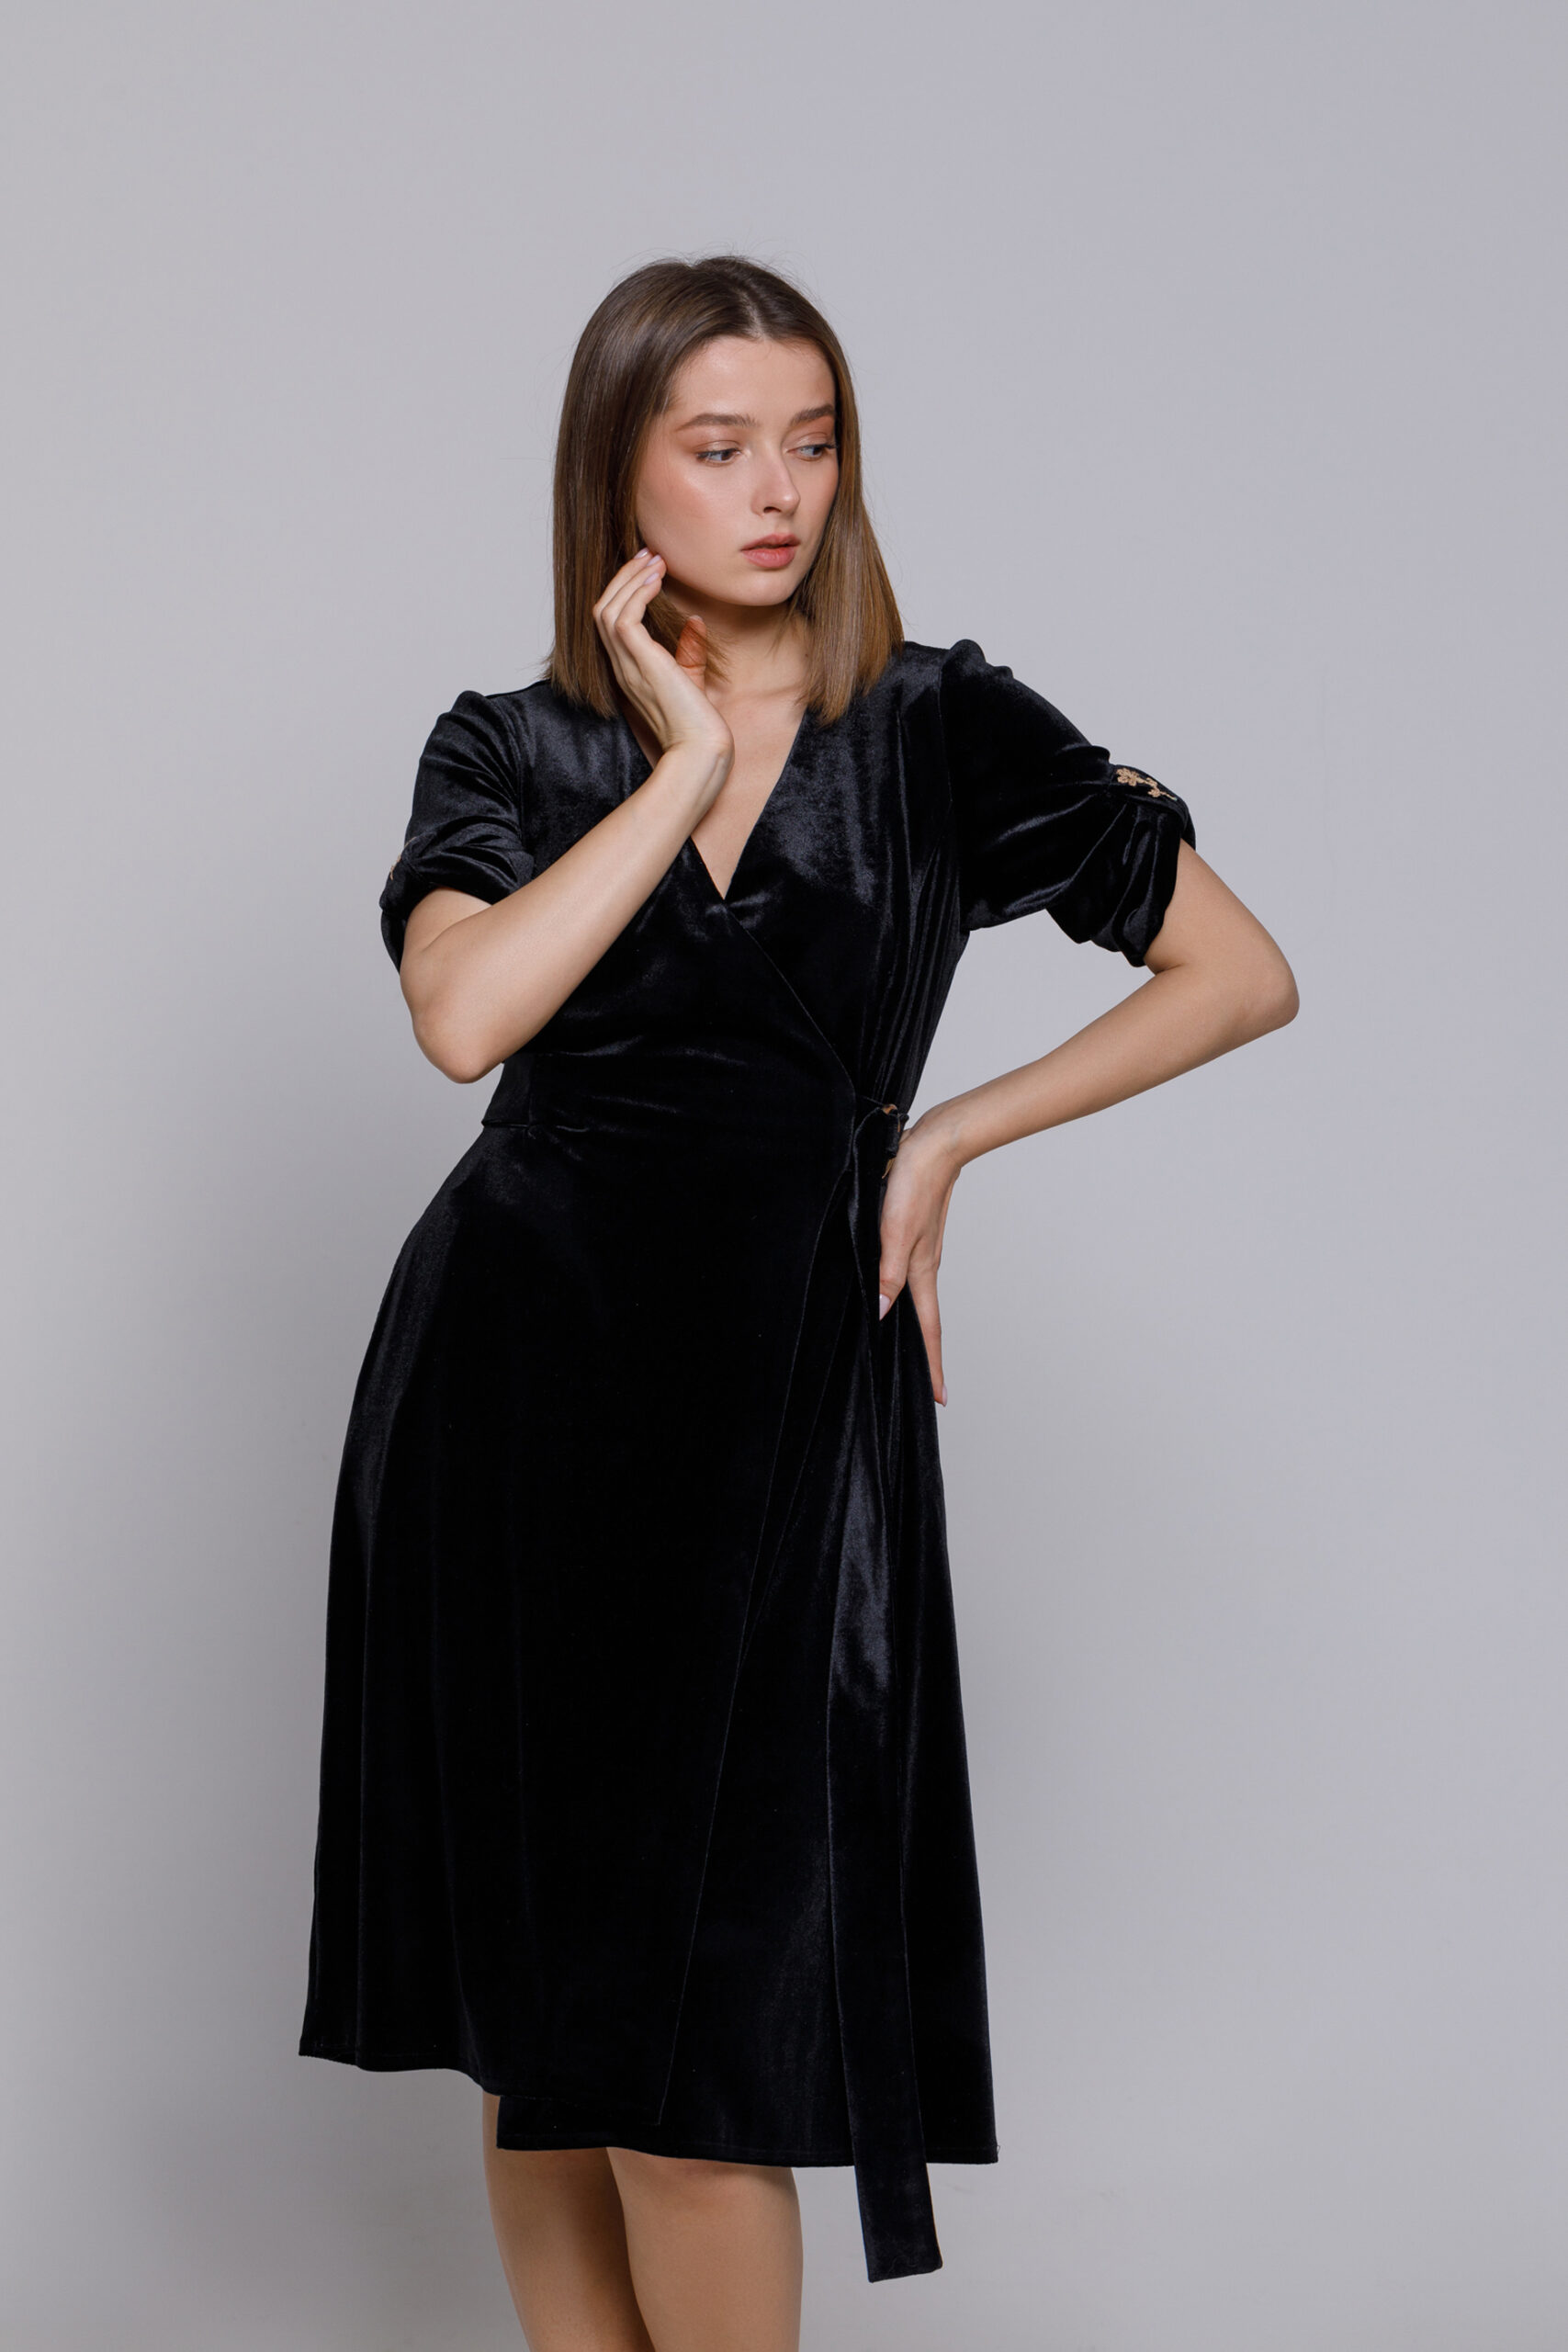 TEEA black velvet dress. Natural fabrics, original design, handmade embroidery